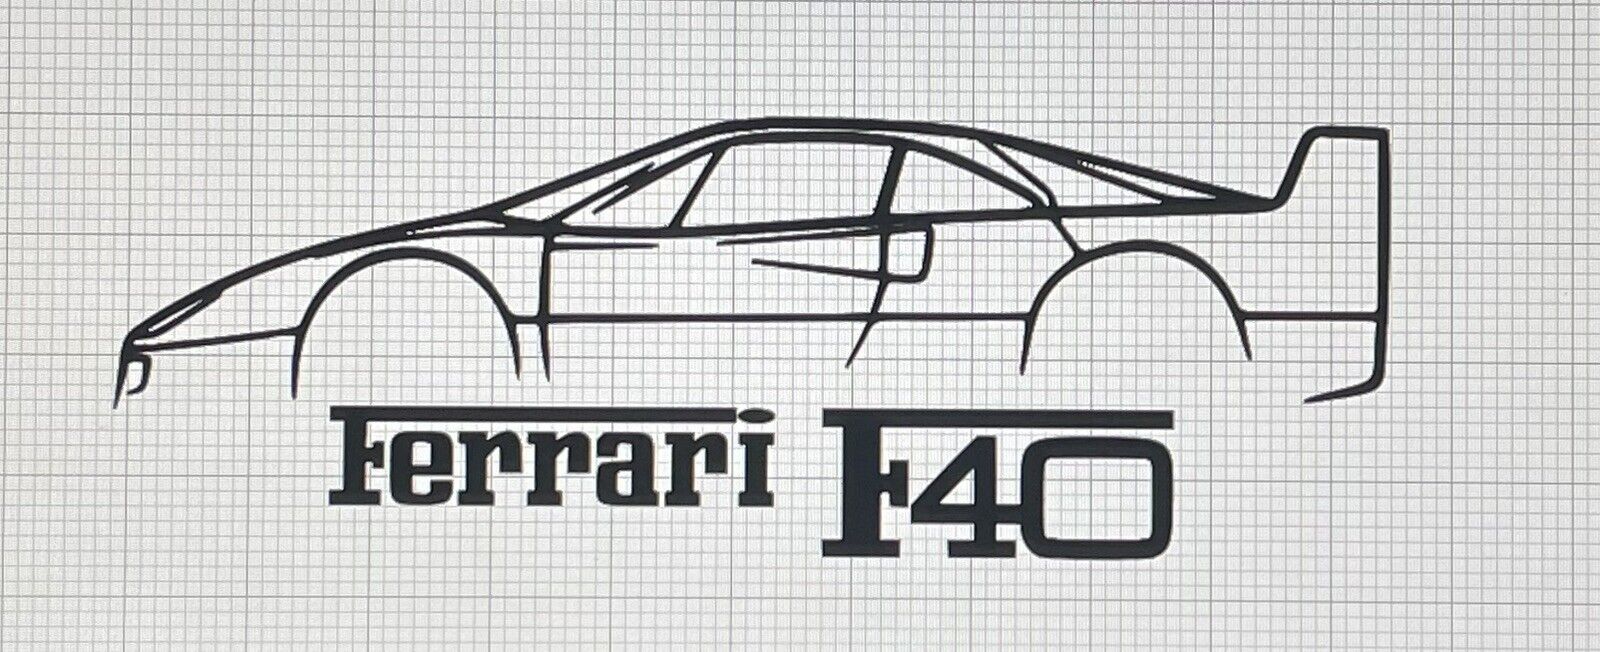 Ferrari F40 silhouette vinyl sticker decal 7in car Laptop Gift